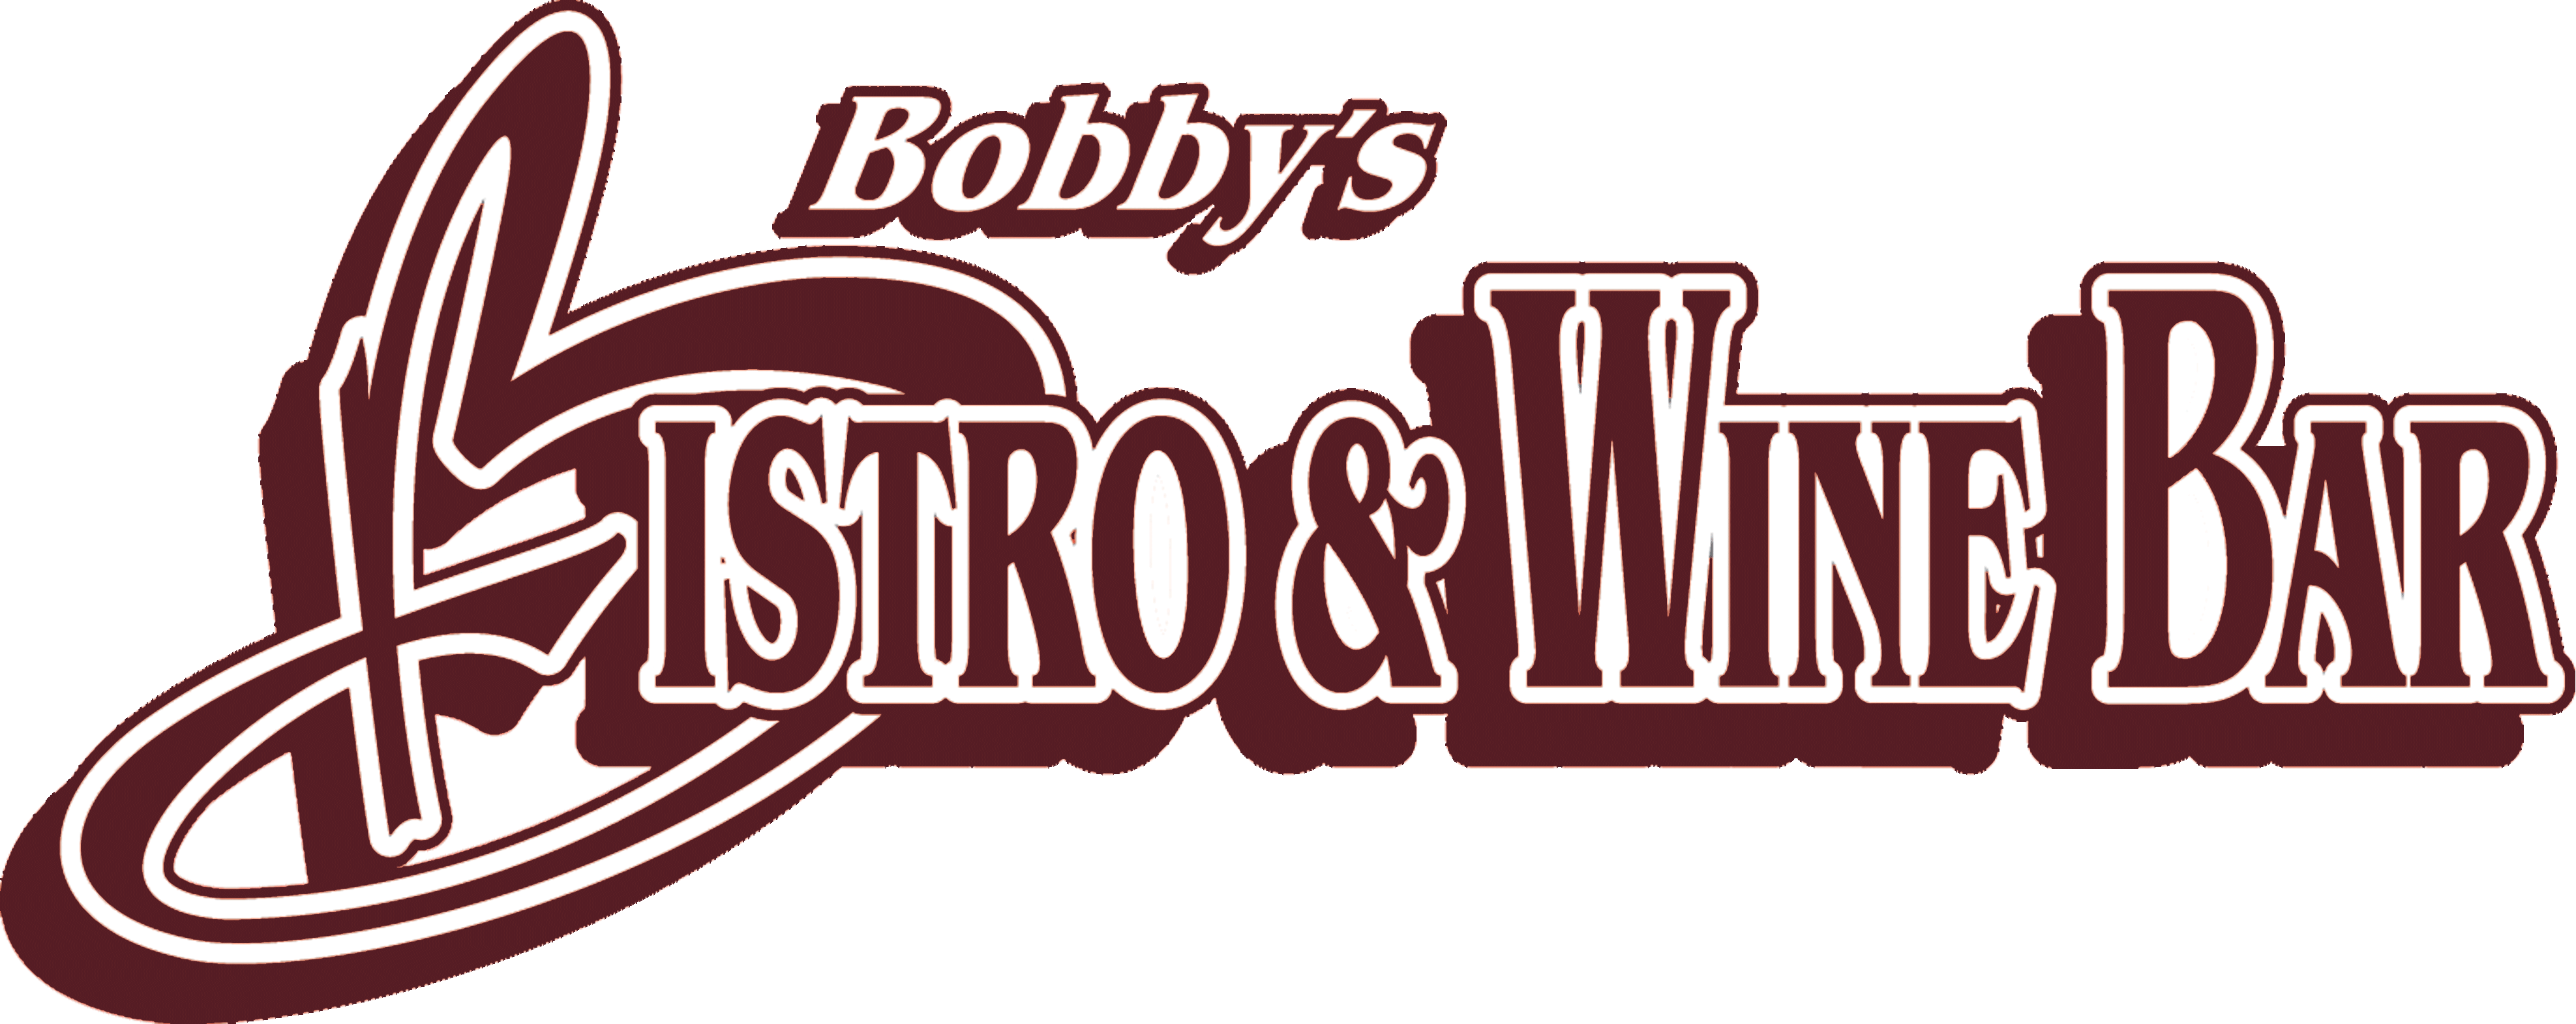 Bobby's Bistro & Wine Bar